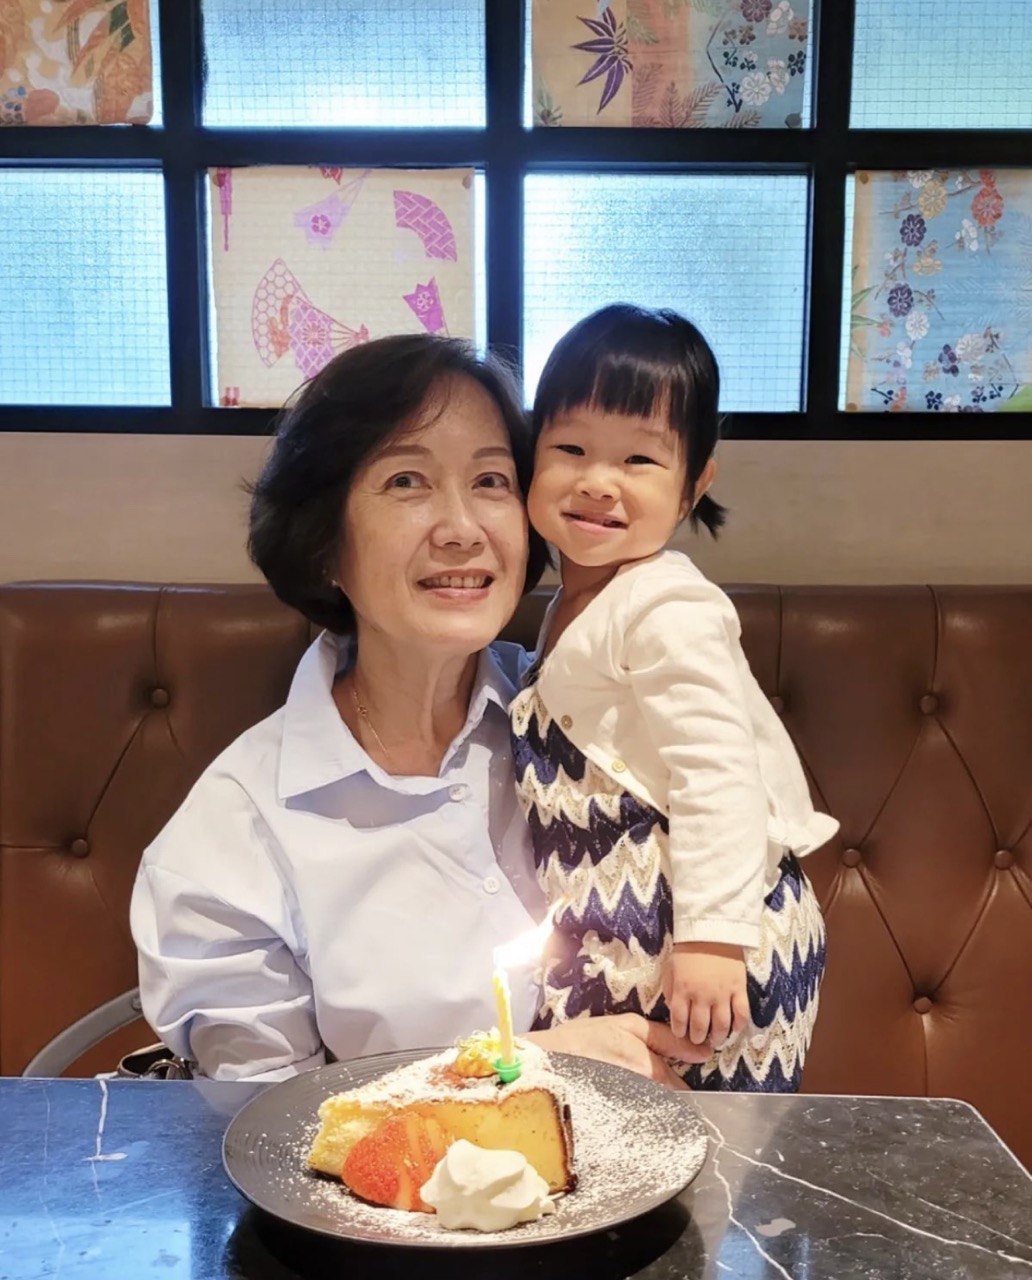 Sheila Sim celebrated her mum's birthday